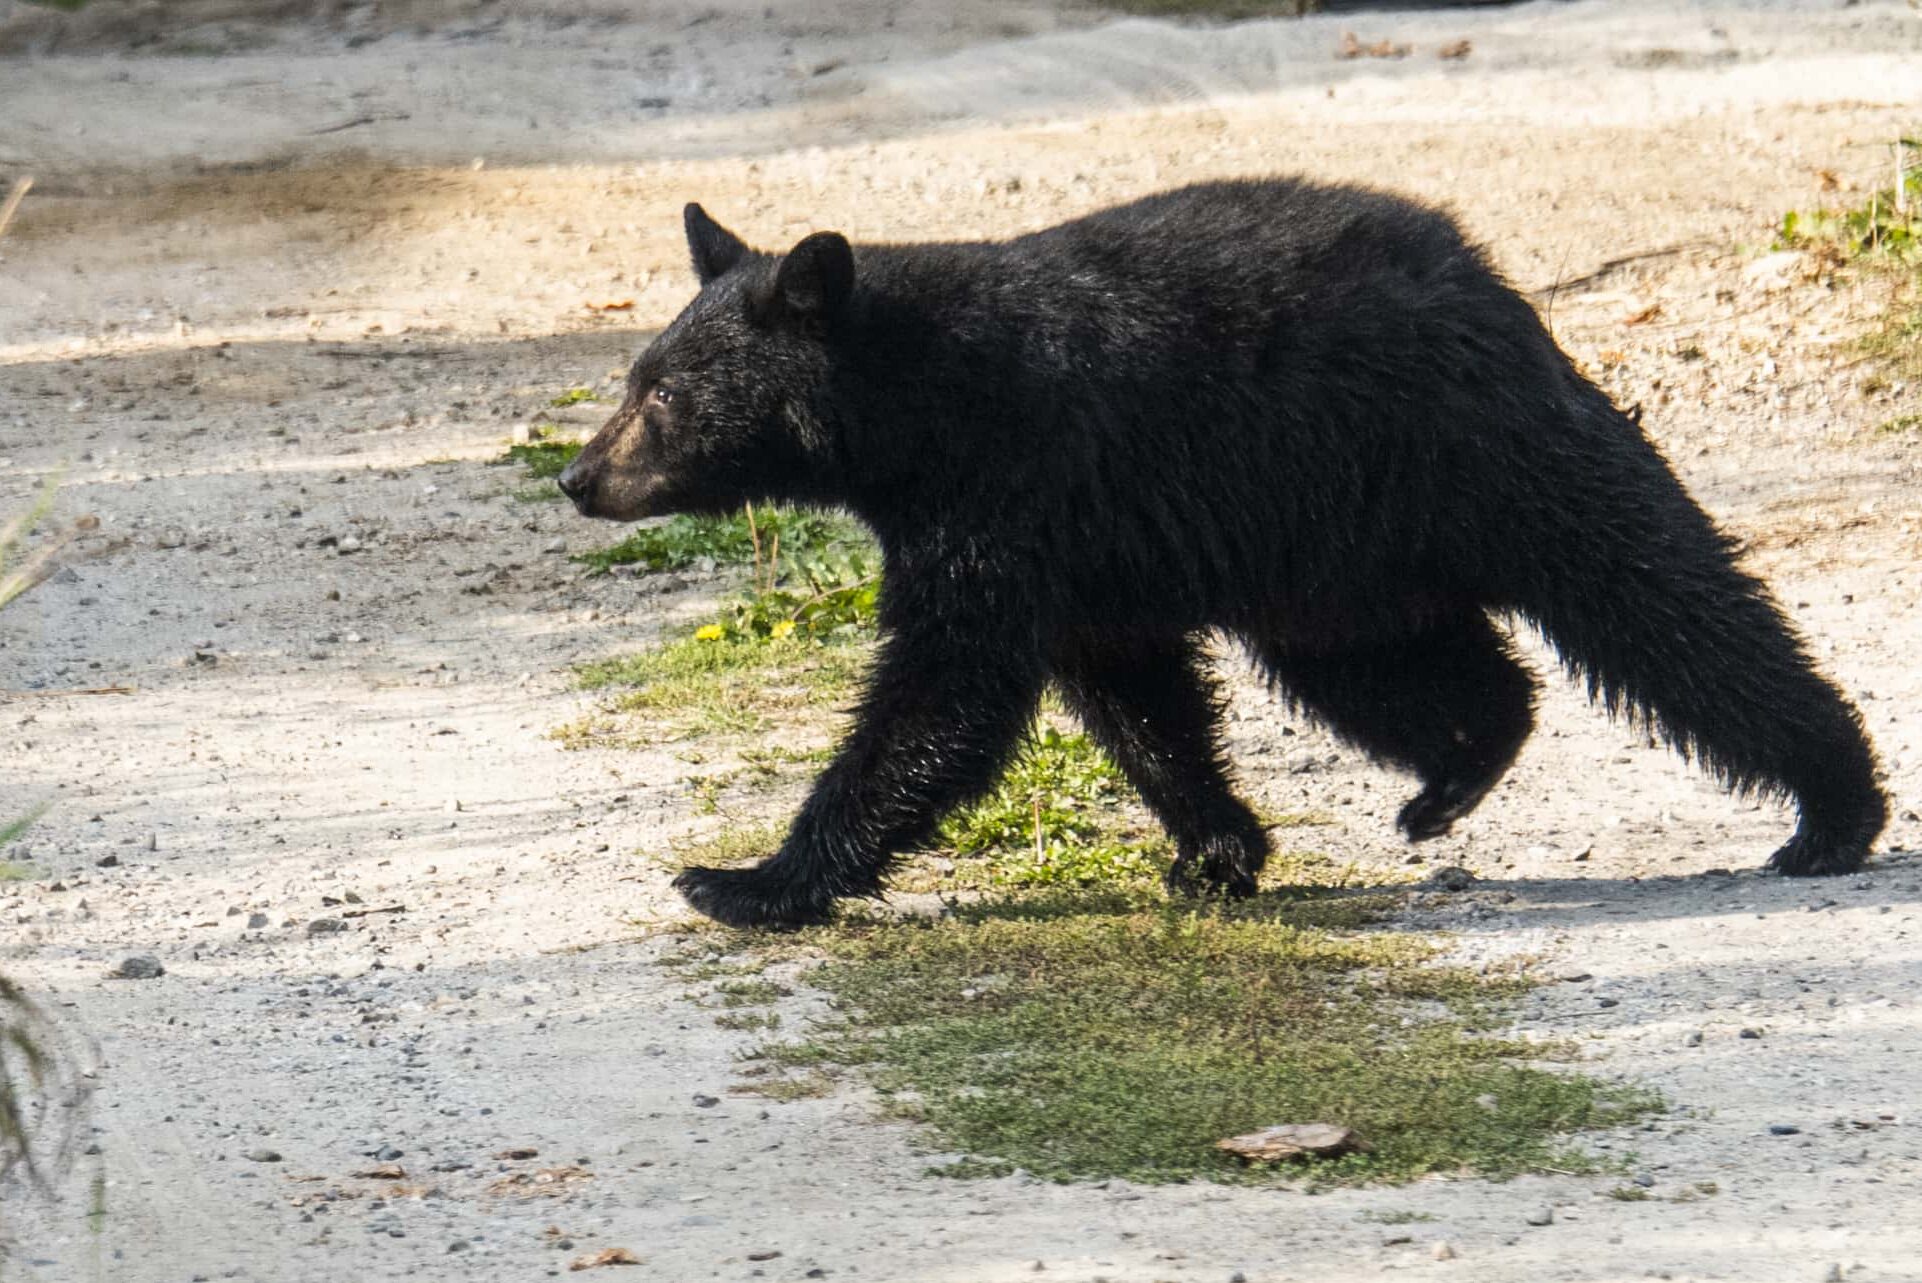 A black bear wanders through a Nelson, B.C. neighbourhood during the day. Photo: Kari Medig / The Narwhal